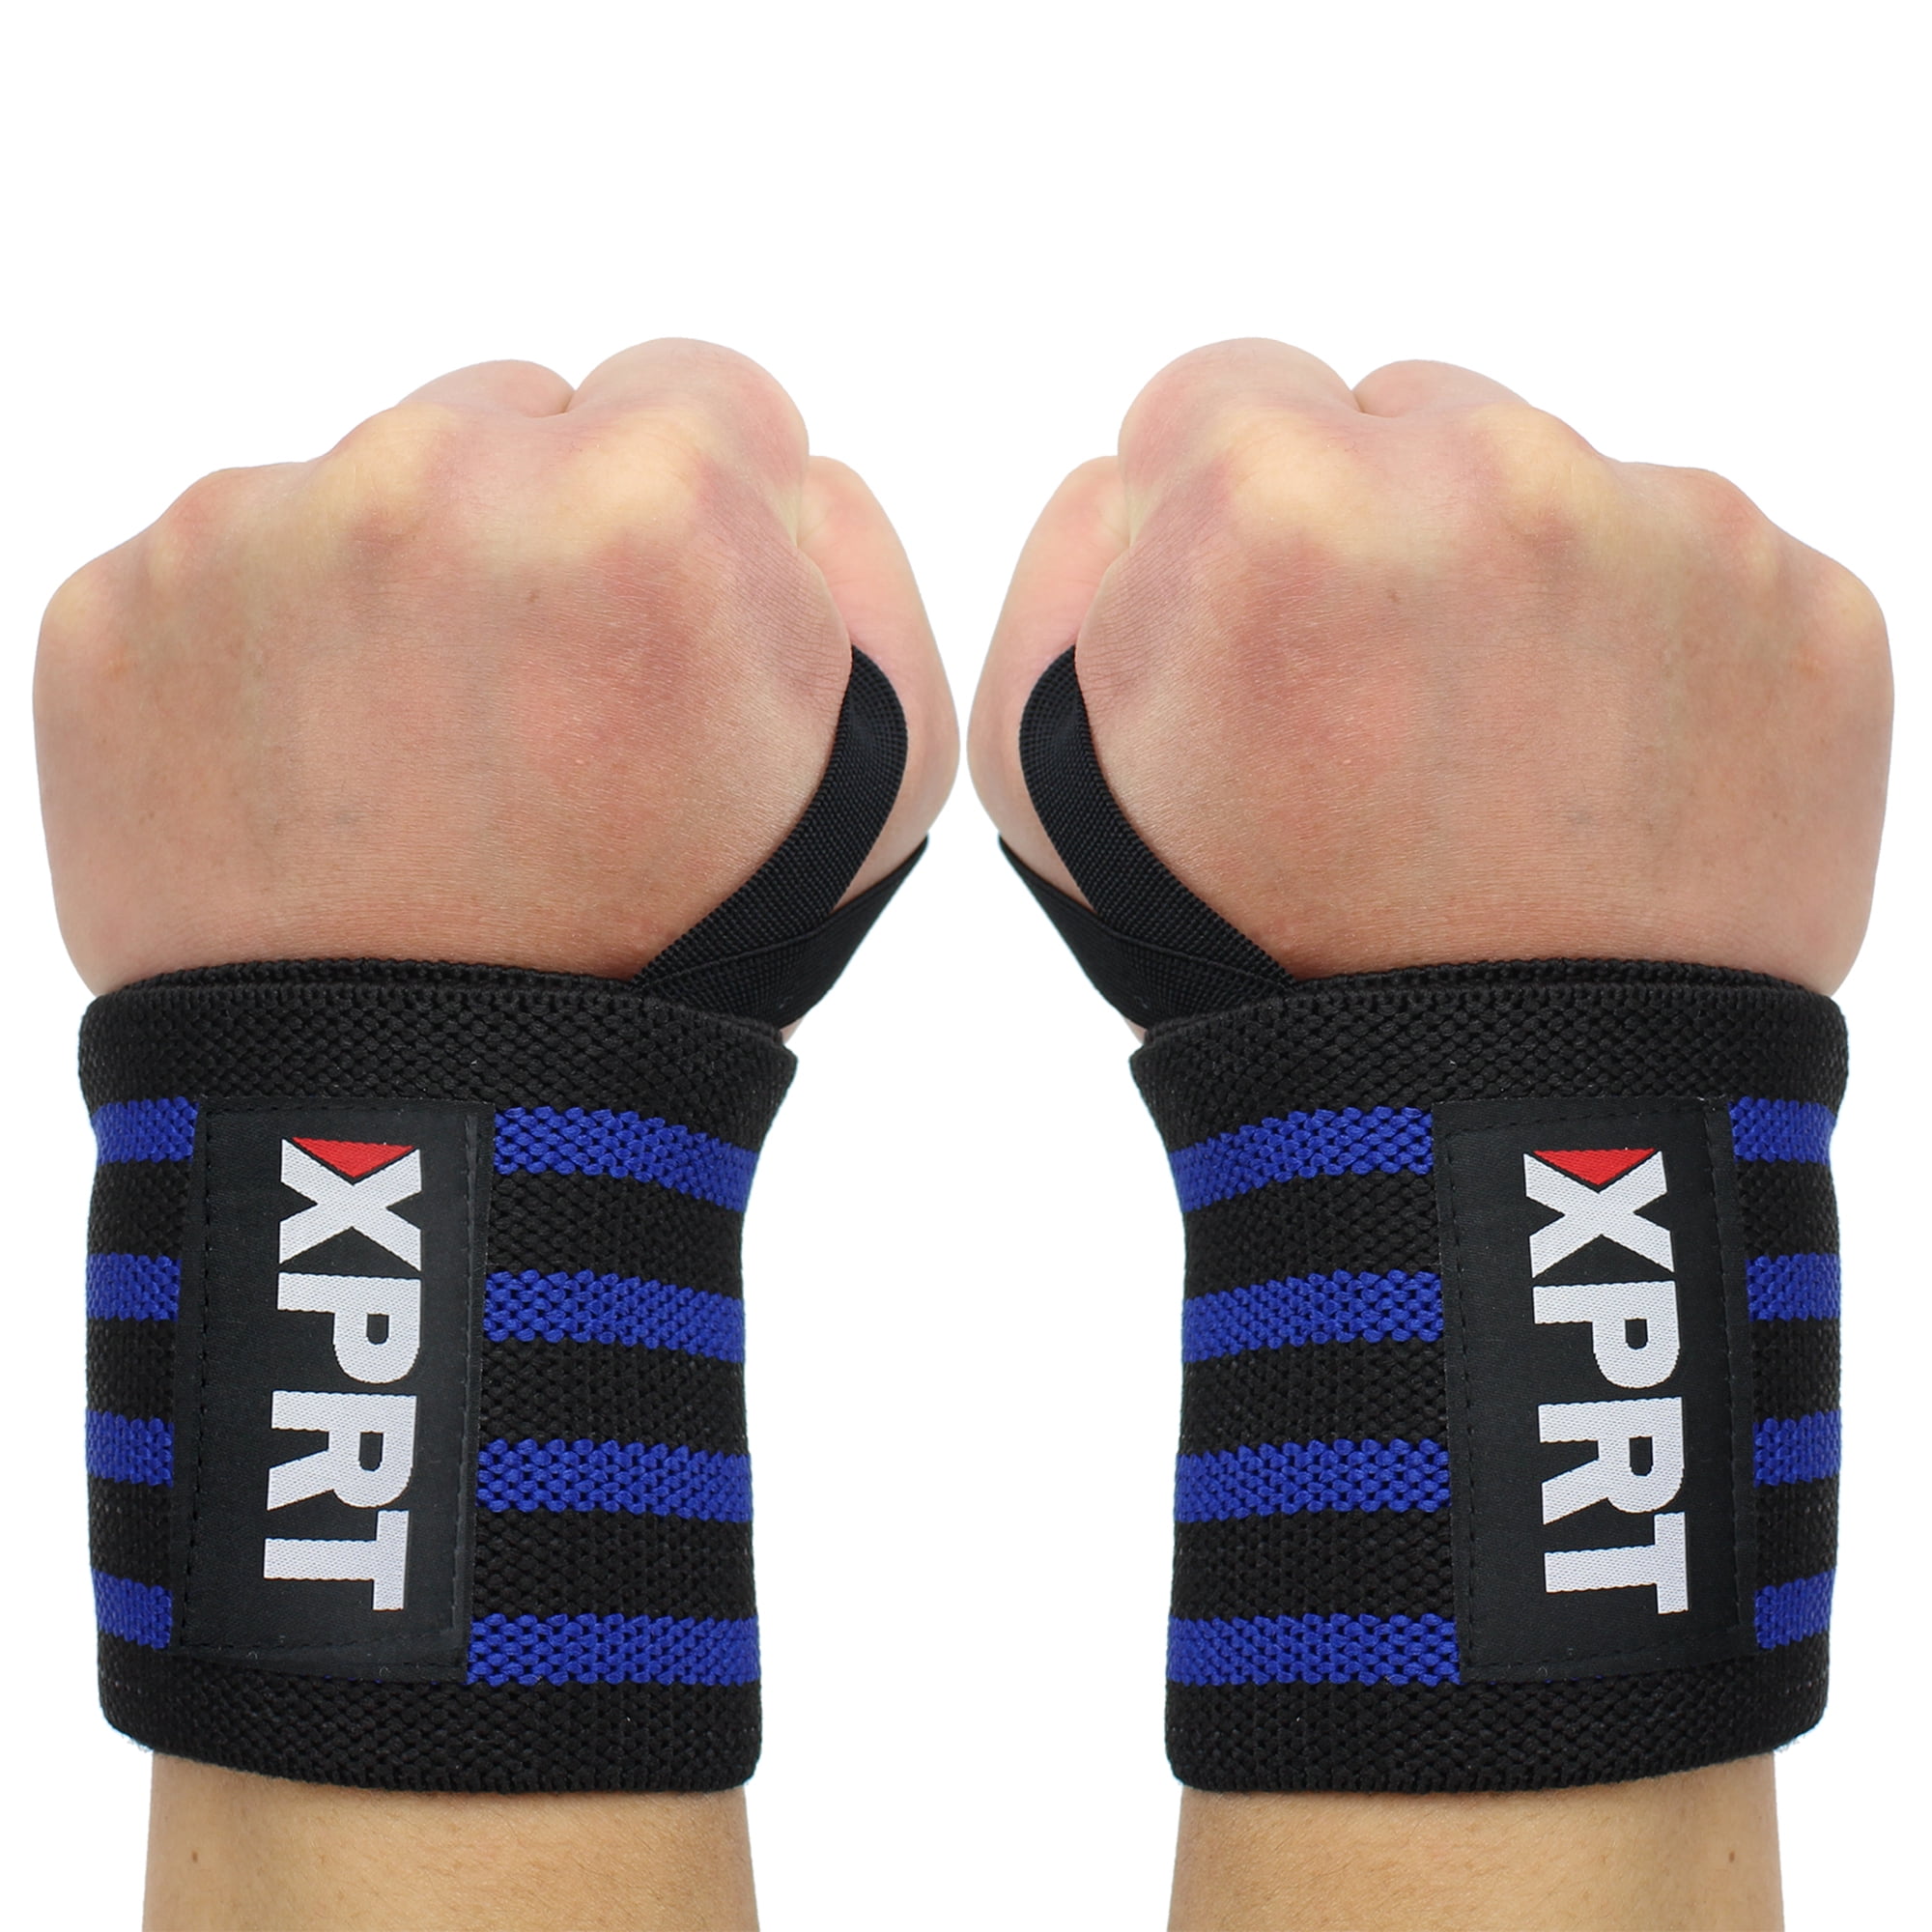 BOOM PRO Wrist Wraps Hand Support Power Lifting Gym Bodybuilding Straps 